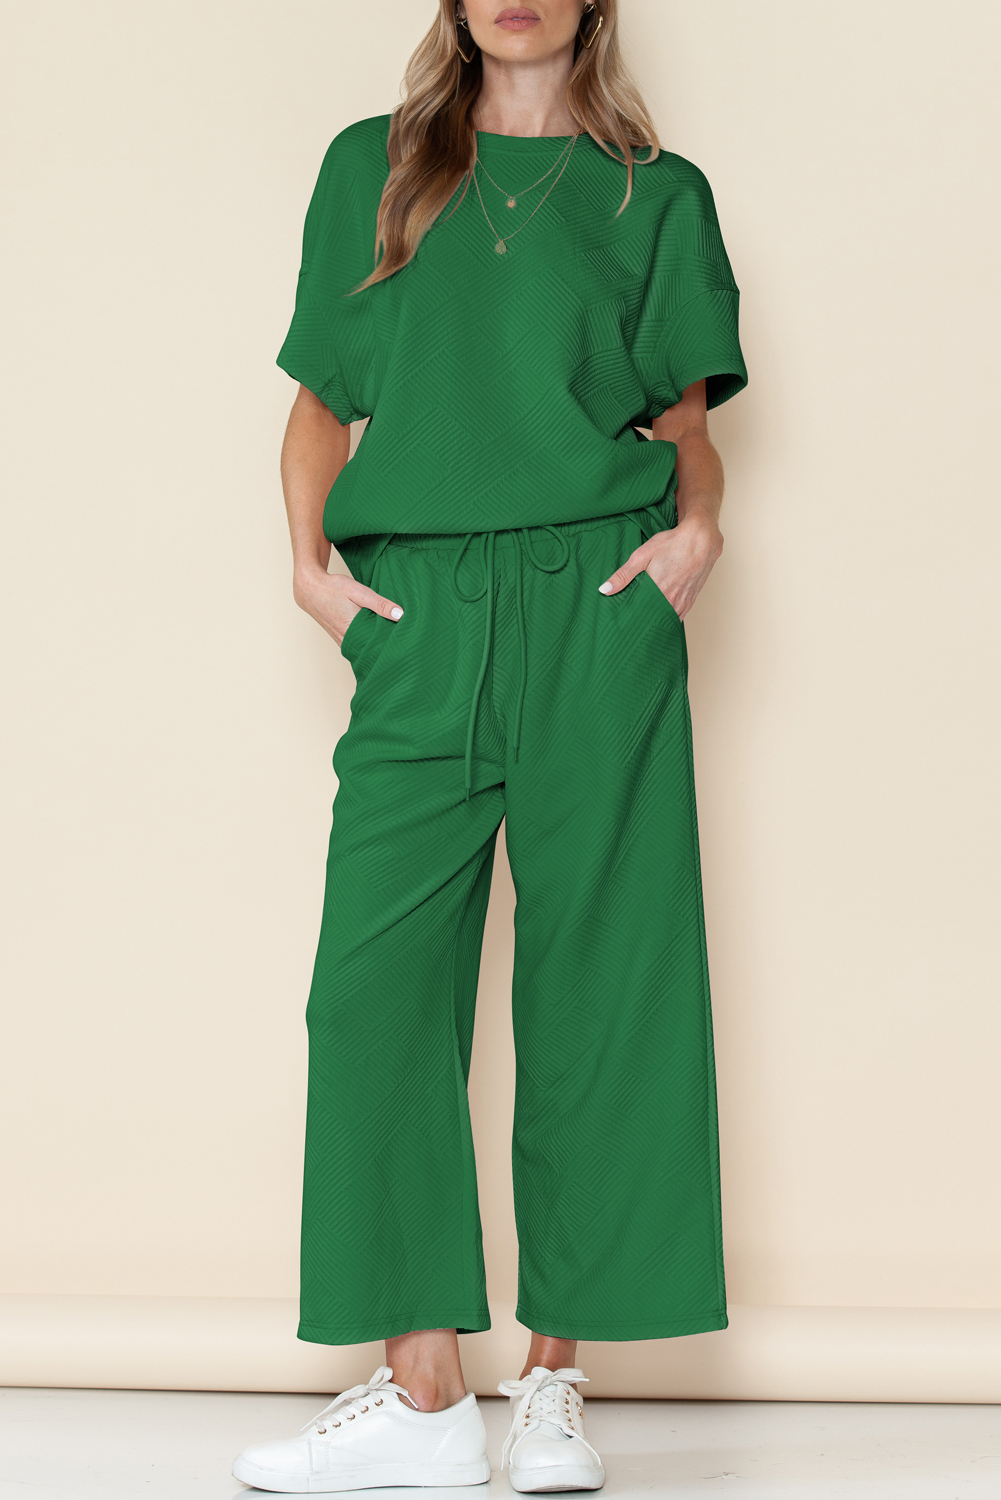 Shewin Wholesale Clothes Dark Green Textured Loose Fit T SHIRT and Drawstring Pants Set